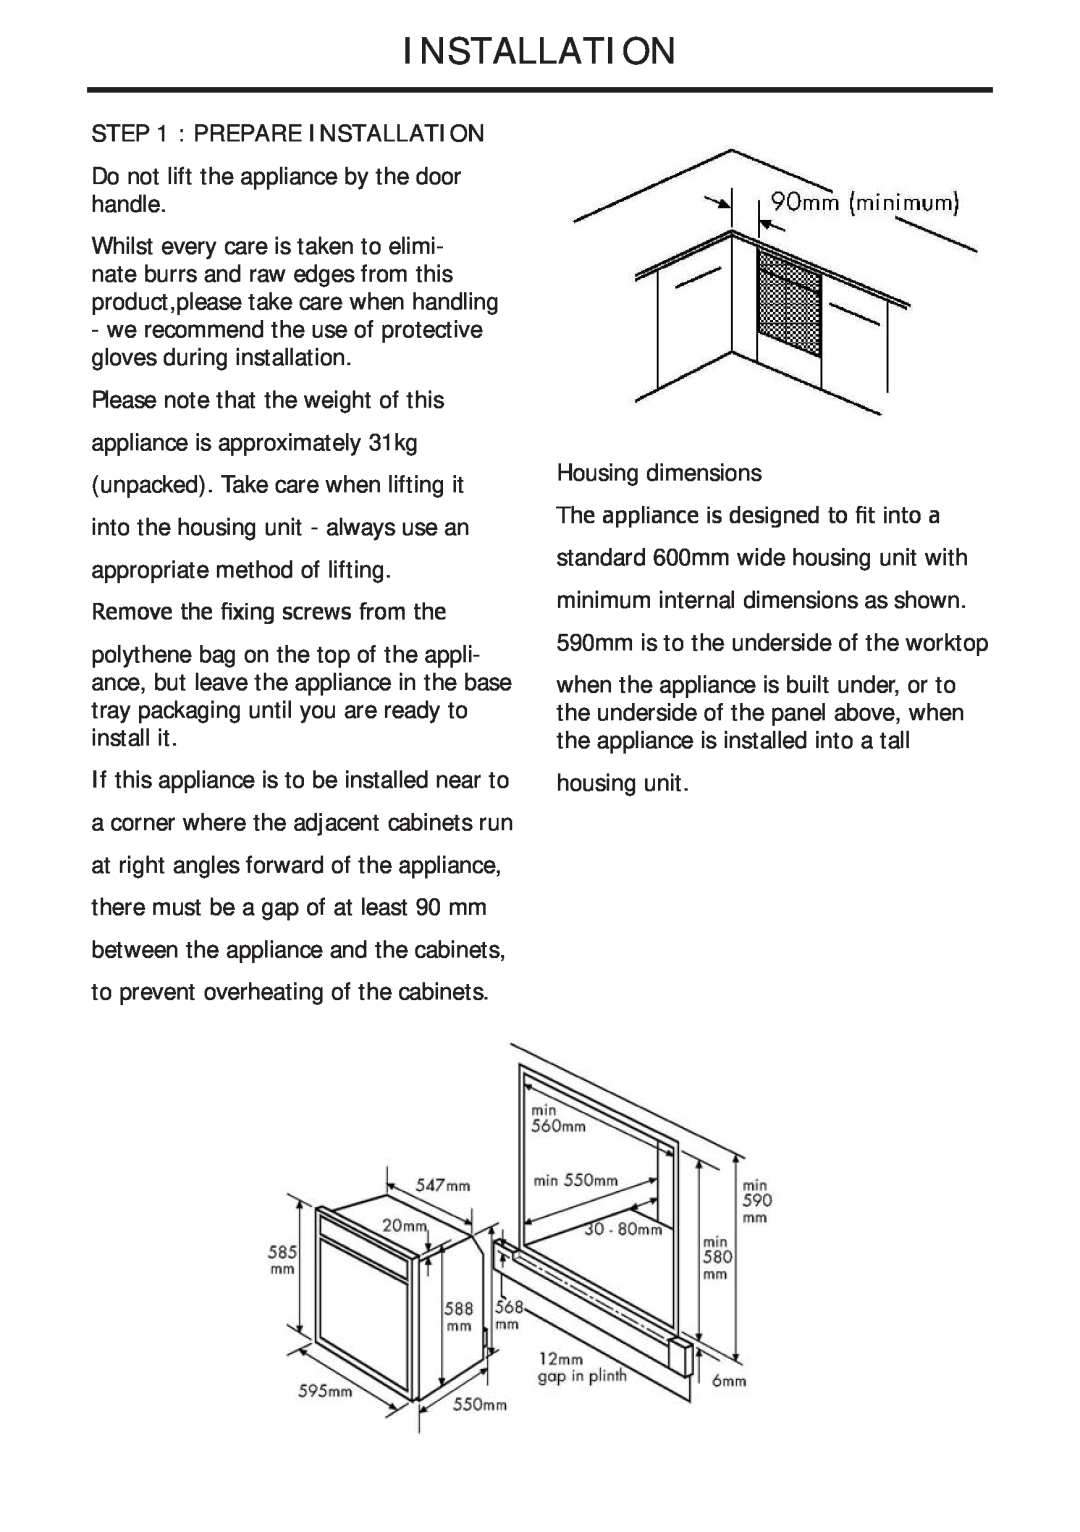 Glen Dimplex Home Appliances Ltd 82757900 manual Prepare Installation 